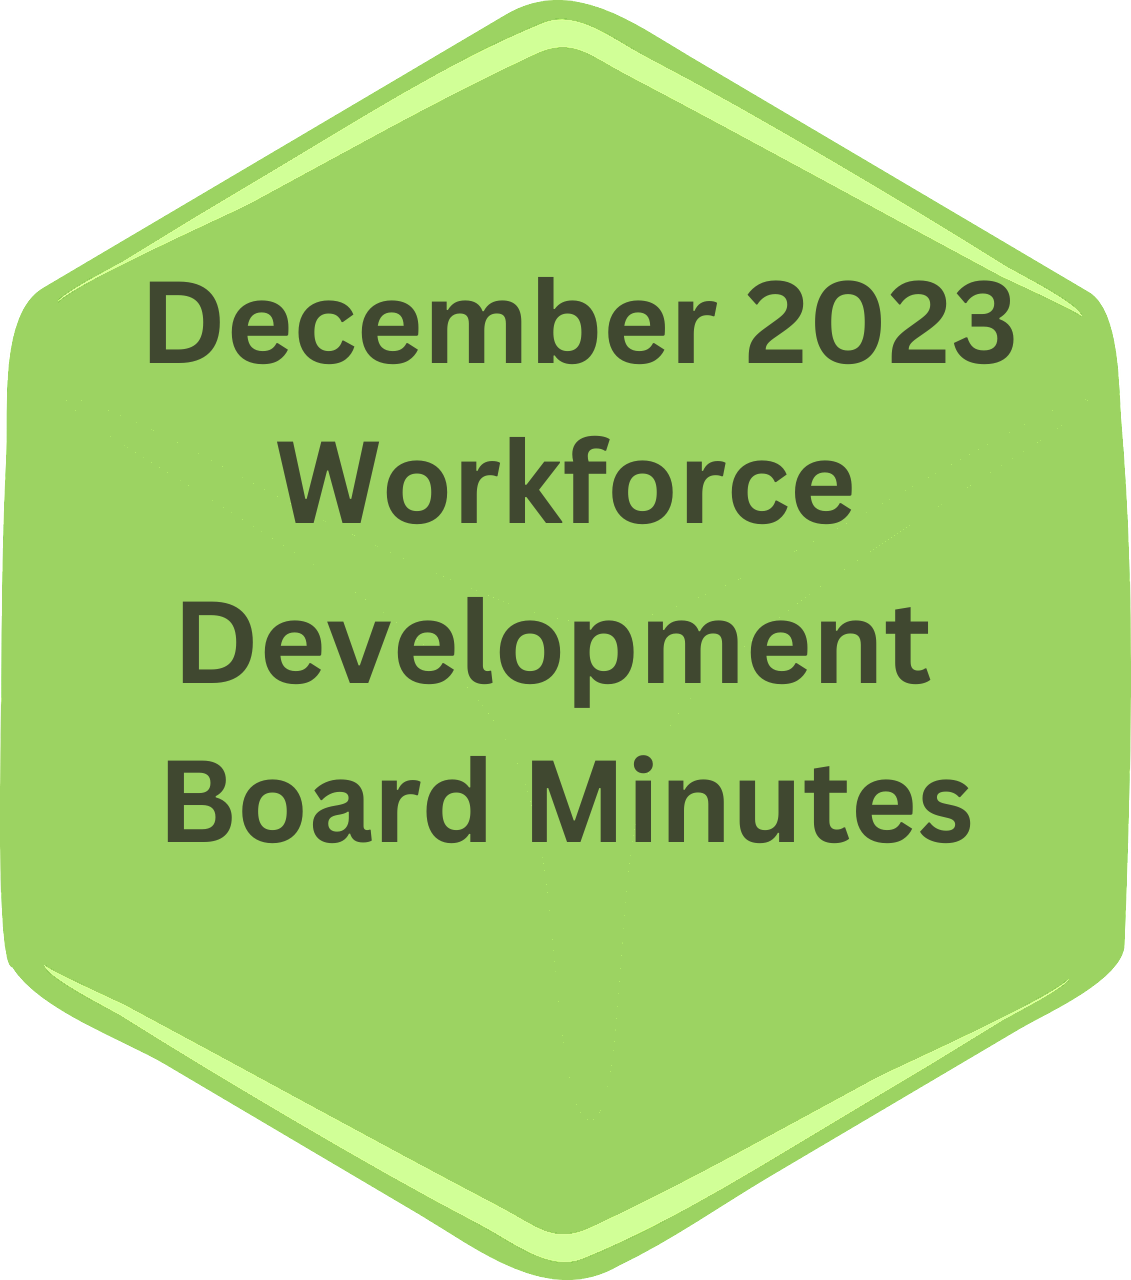 workforce development board meeting minutes December 2023